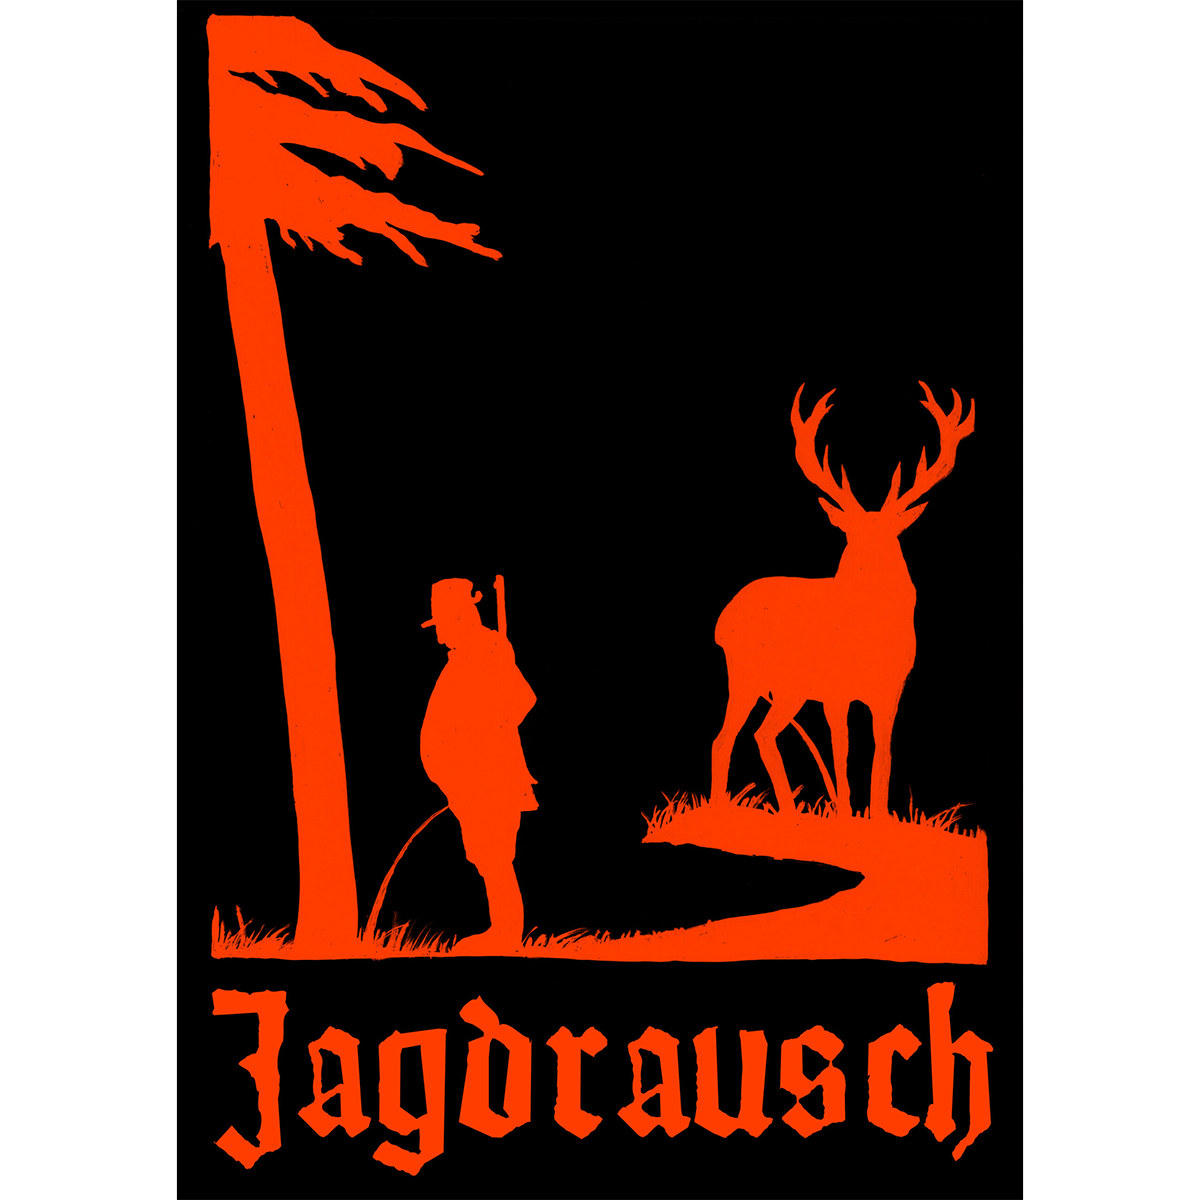 Jagdrausch - Pawel Luchowski